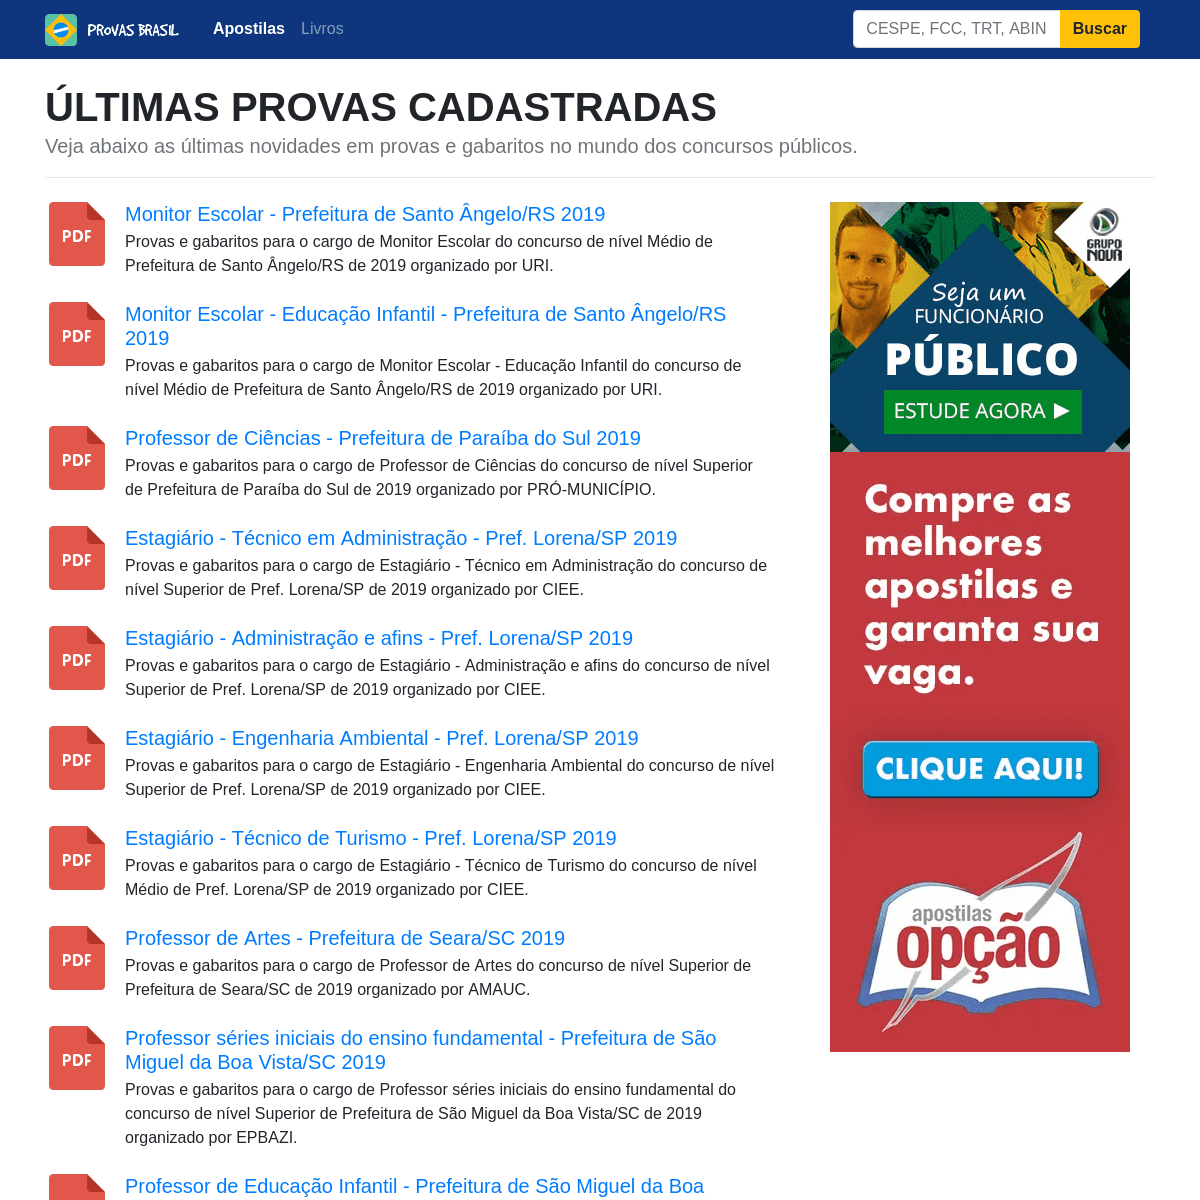 A complete backup of provasbrasil.com.br